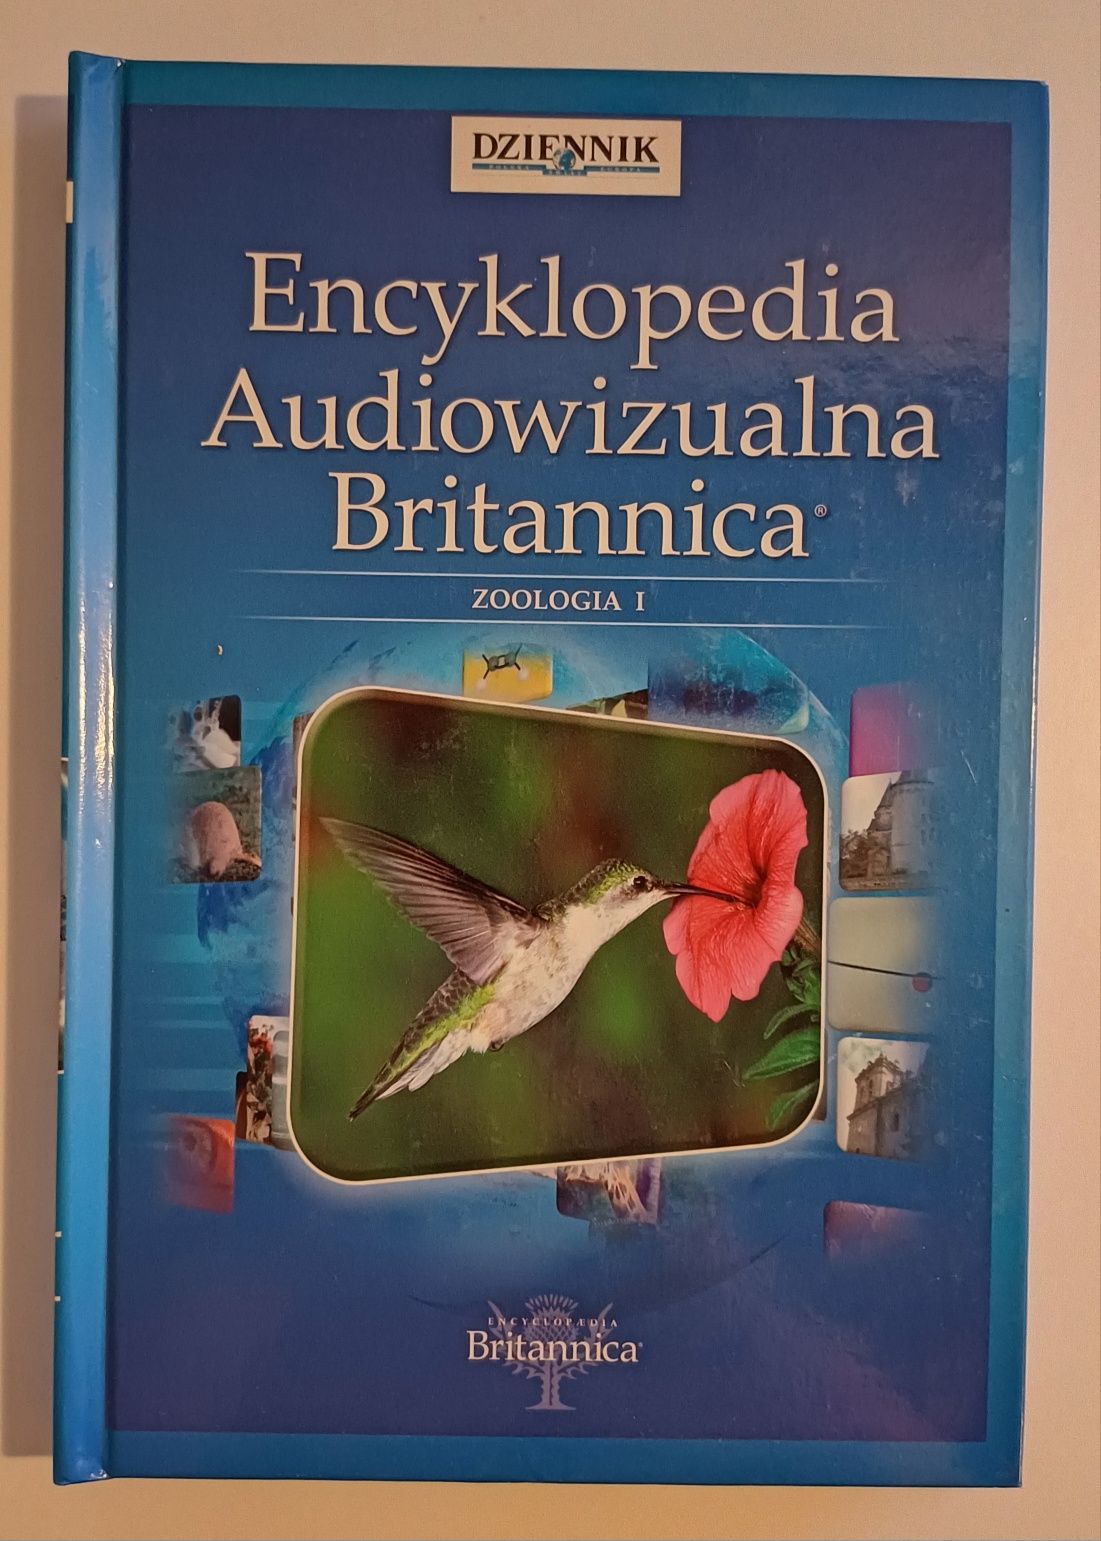 Encyklopedia audiowizualna Britannica Zoologia 1